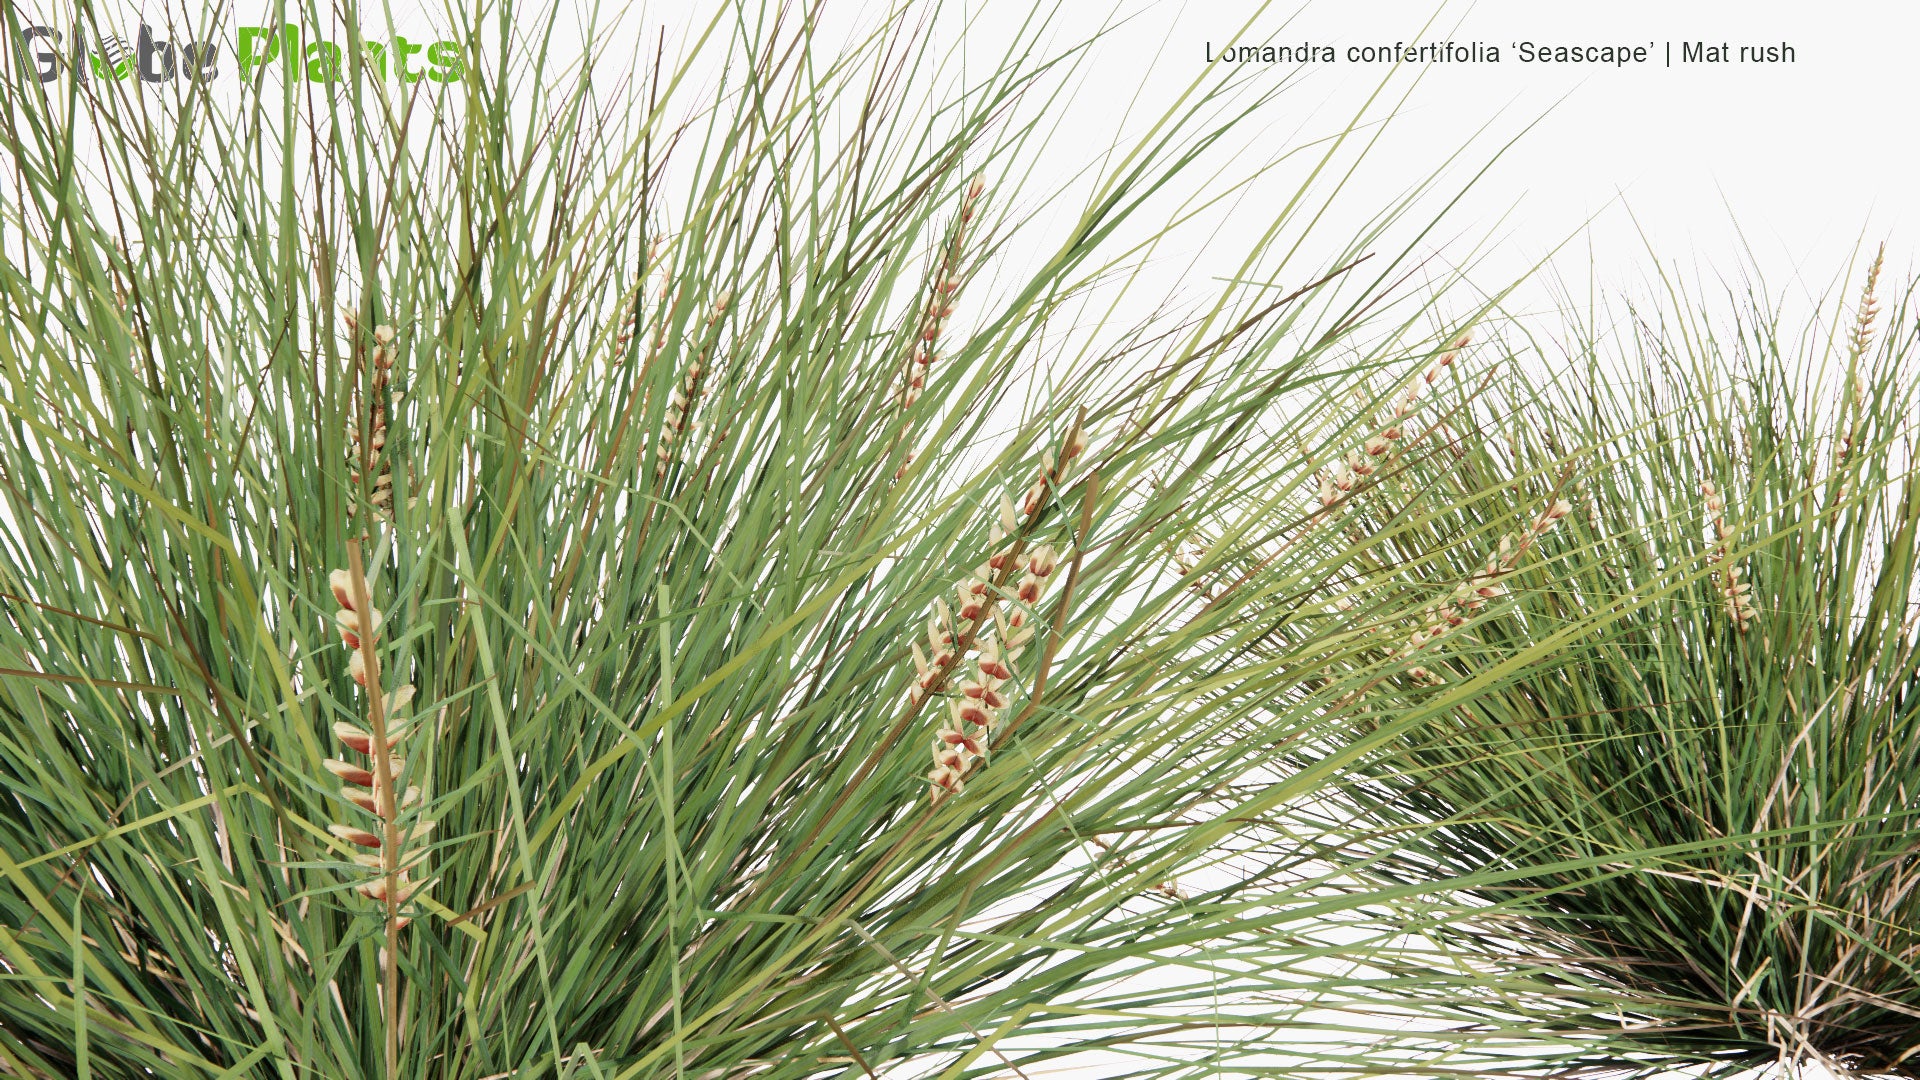 Low Poly Lomandra 'Confertifolia Seascape' - Mat Rush (3D Model)